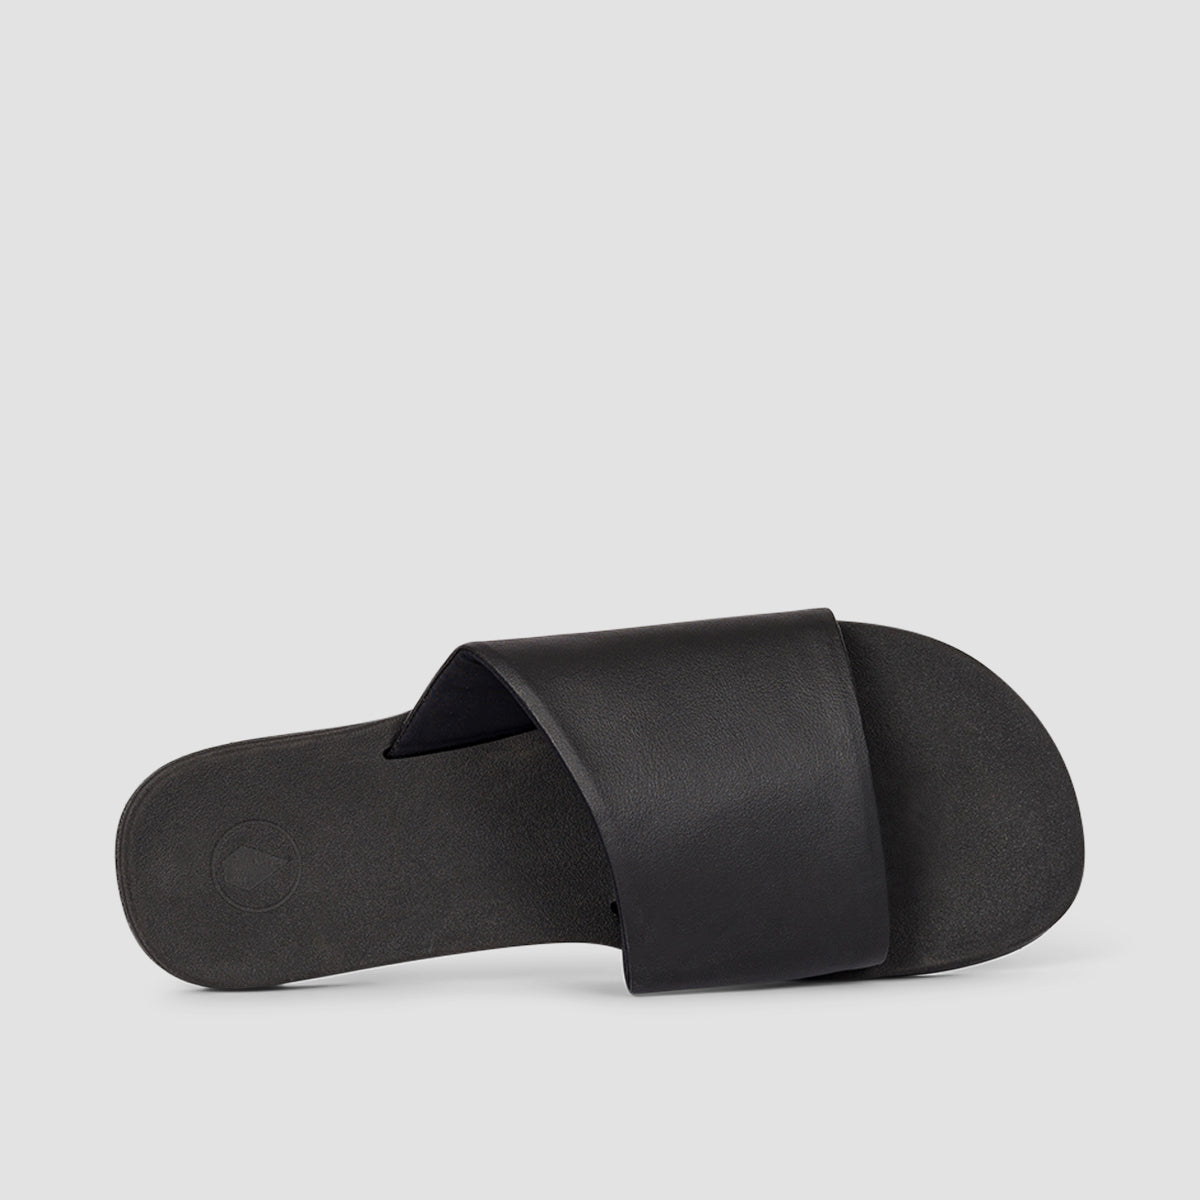 Volcom E-Cliner Slide Sandals Black Out - Womens